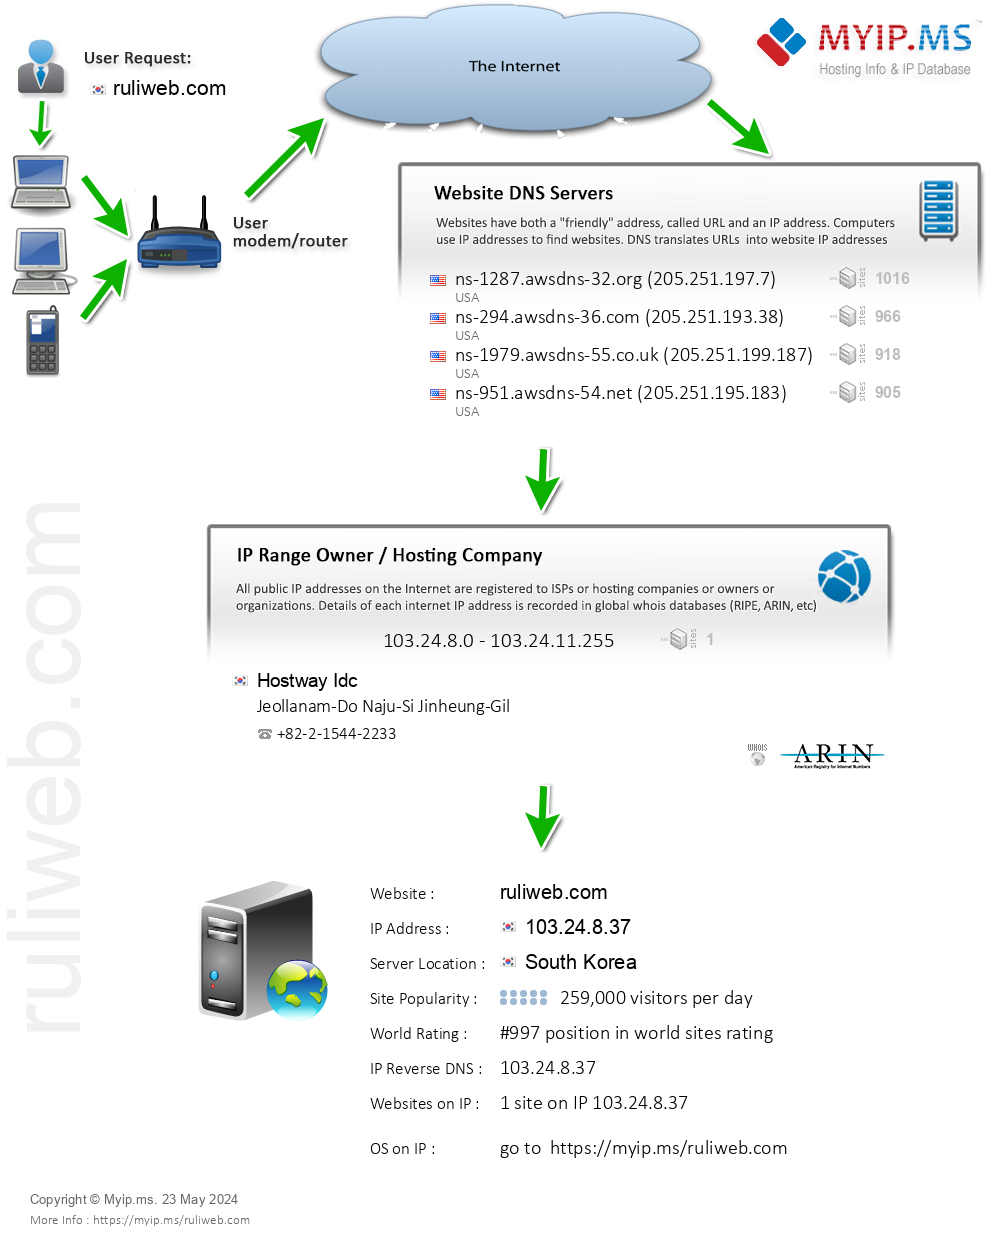 Ruliweb.com - Website Hosting Visual IP Diagram